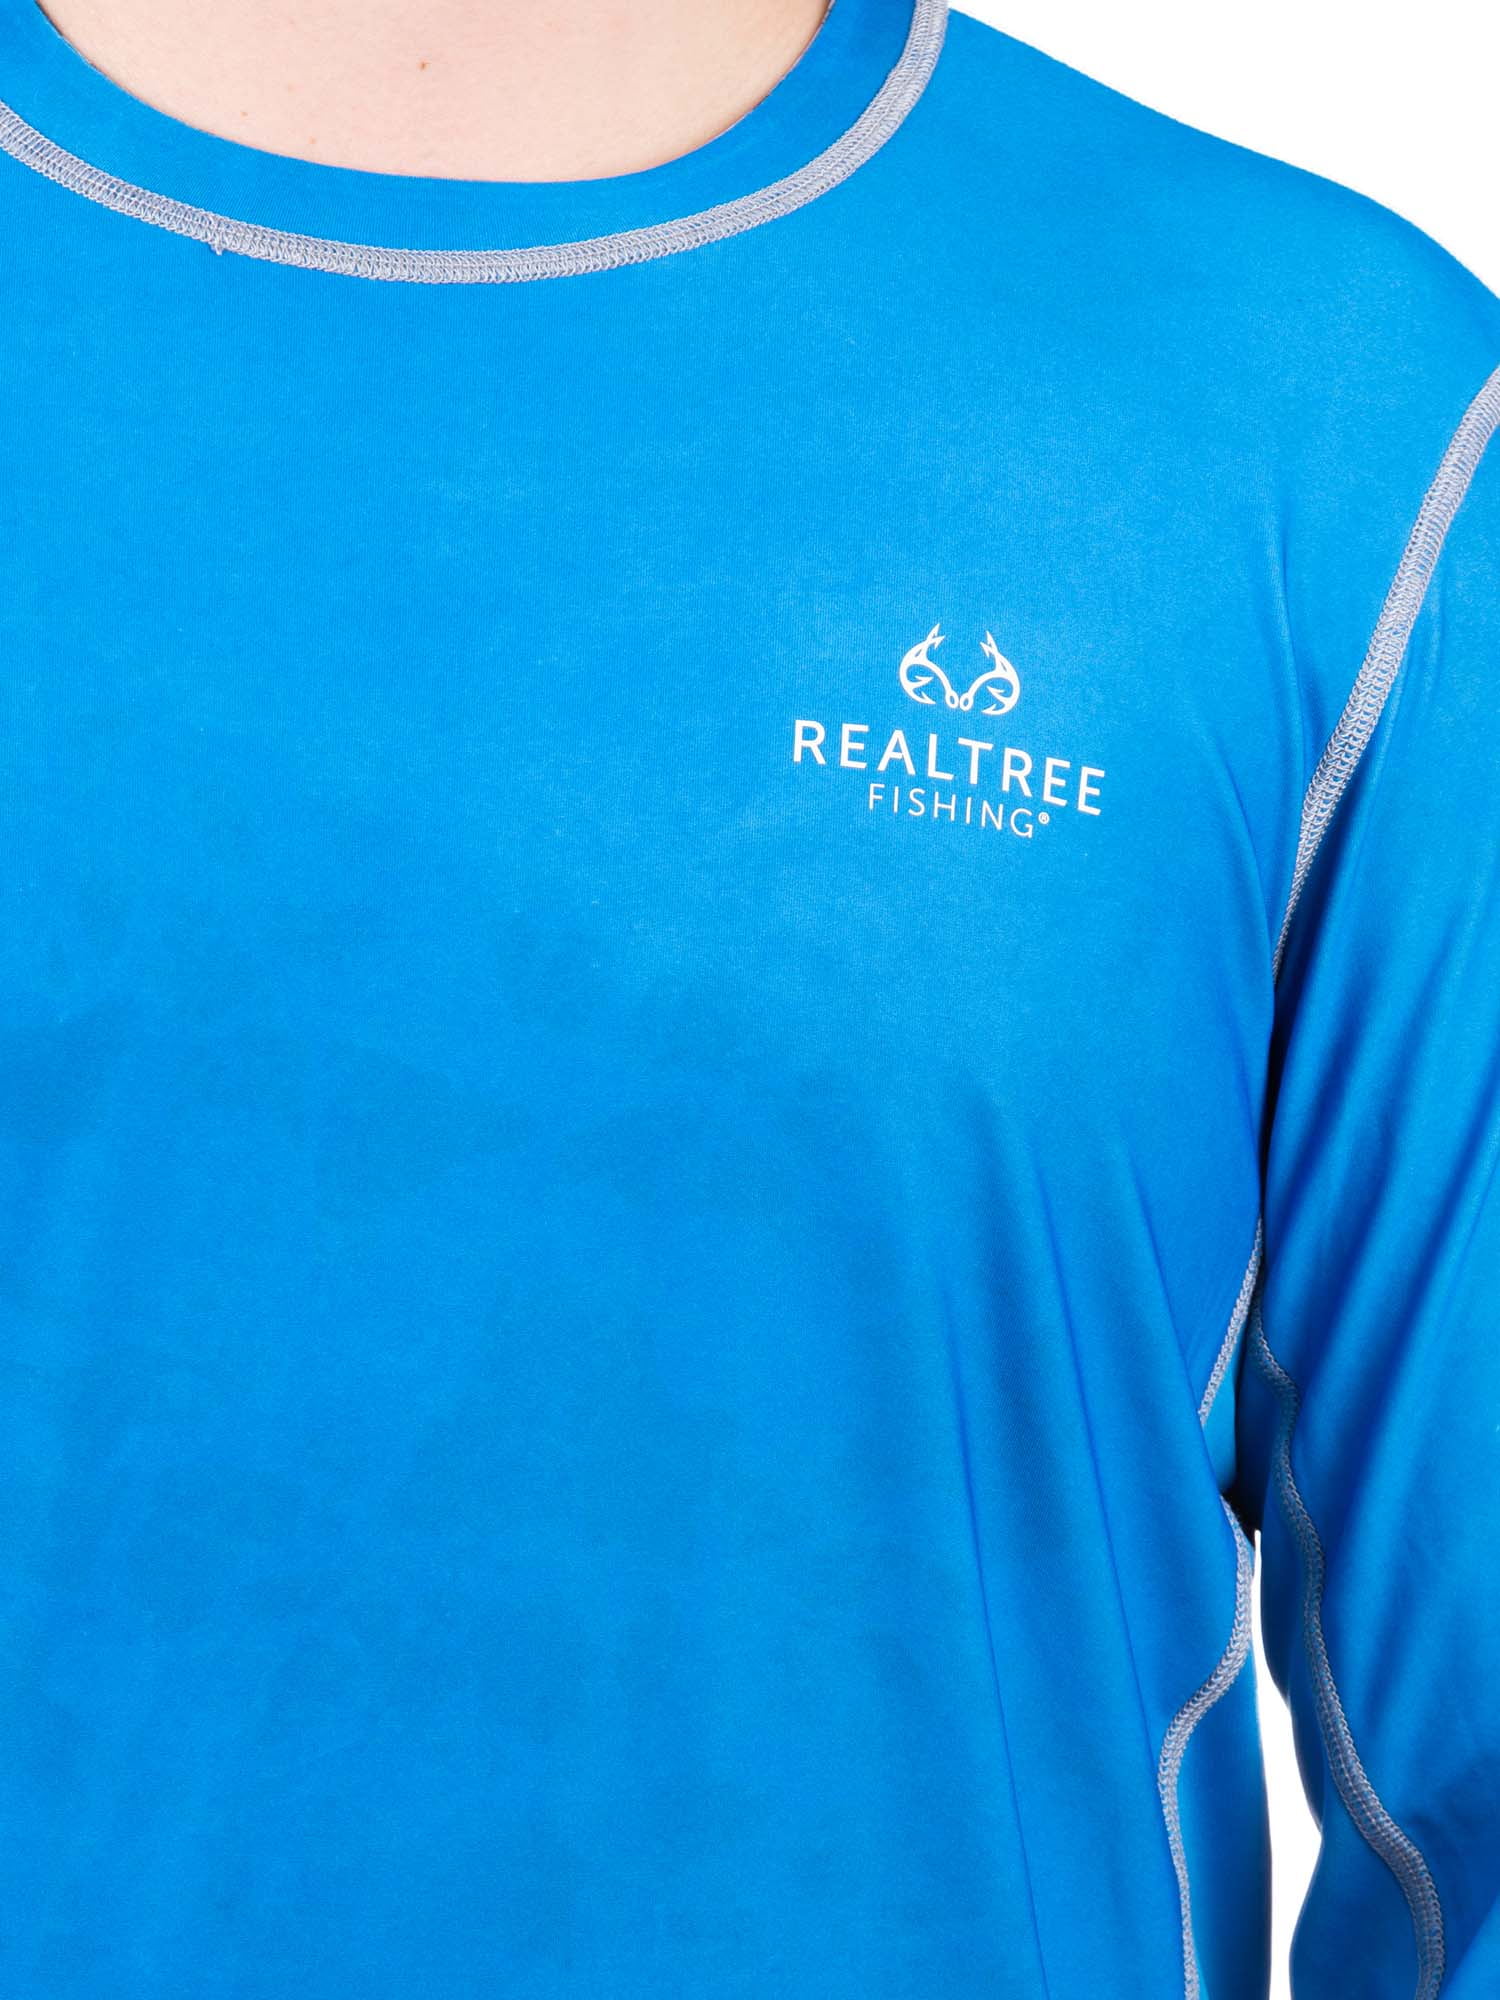 NWT Men's Realtree Fishing Logo Wind Performance Tee T-Shirt Blue SMALL 